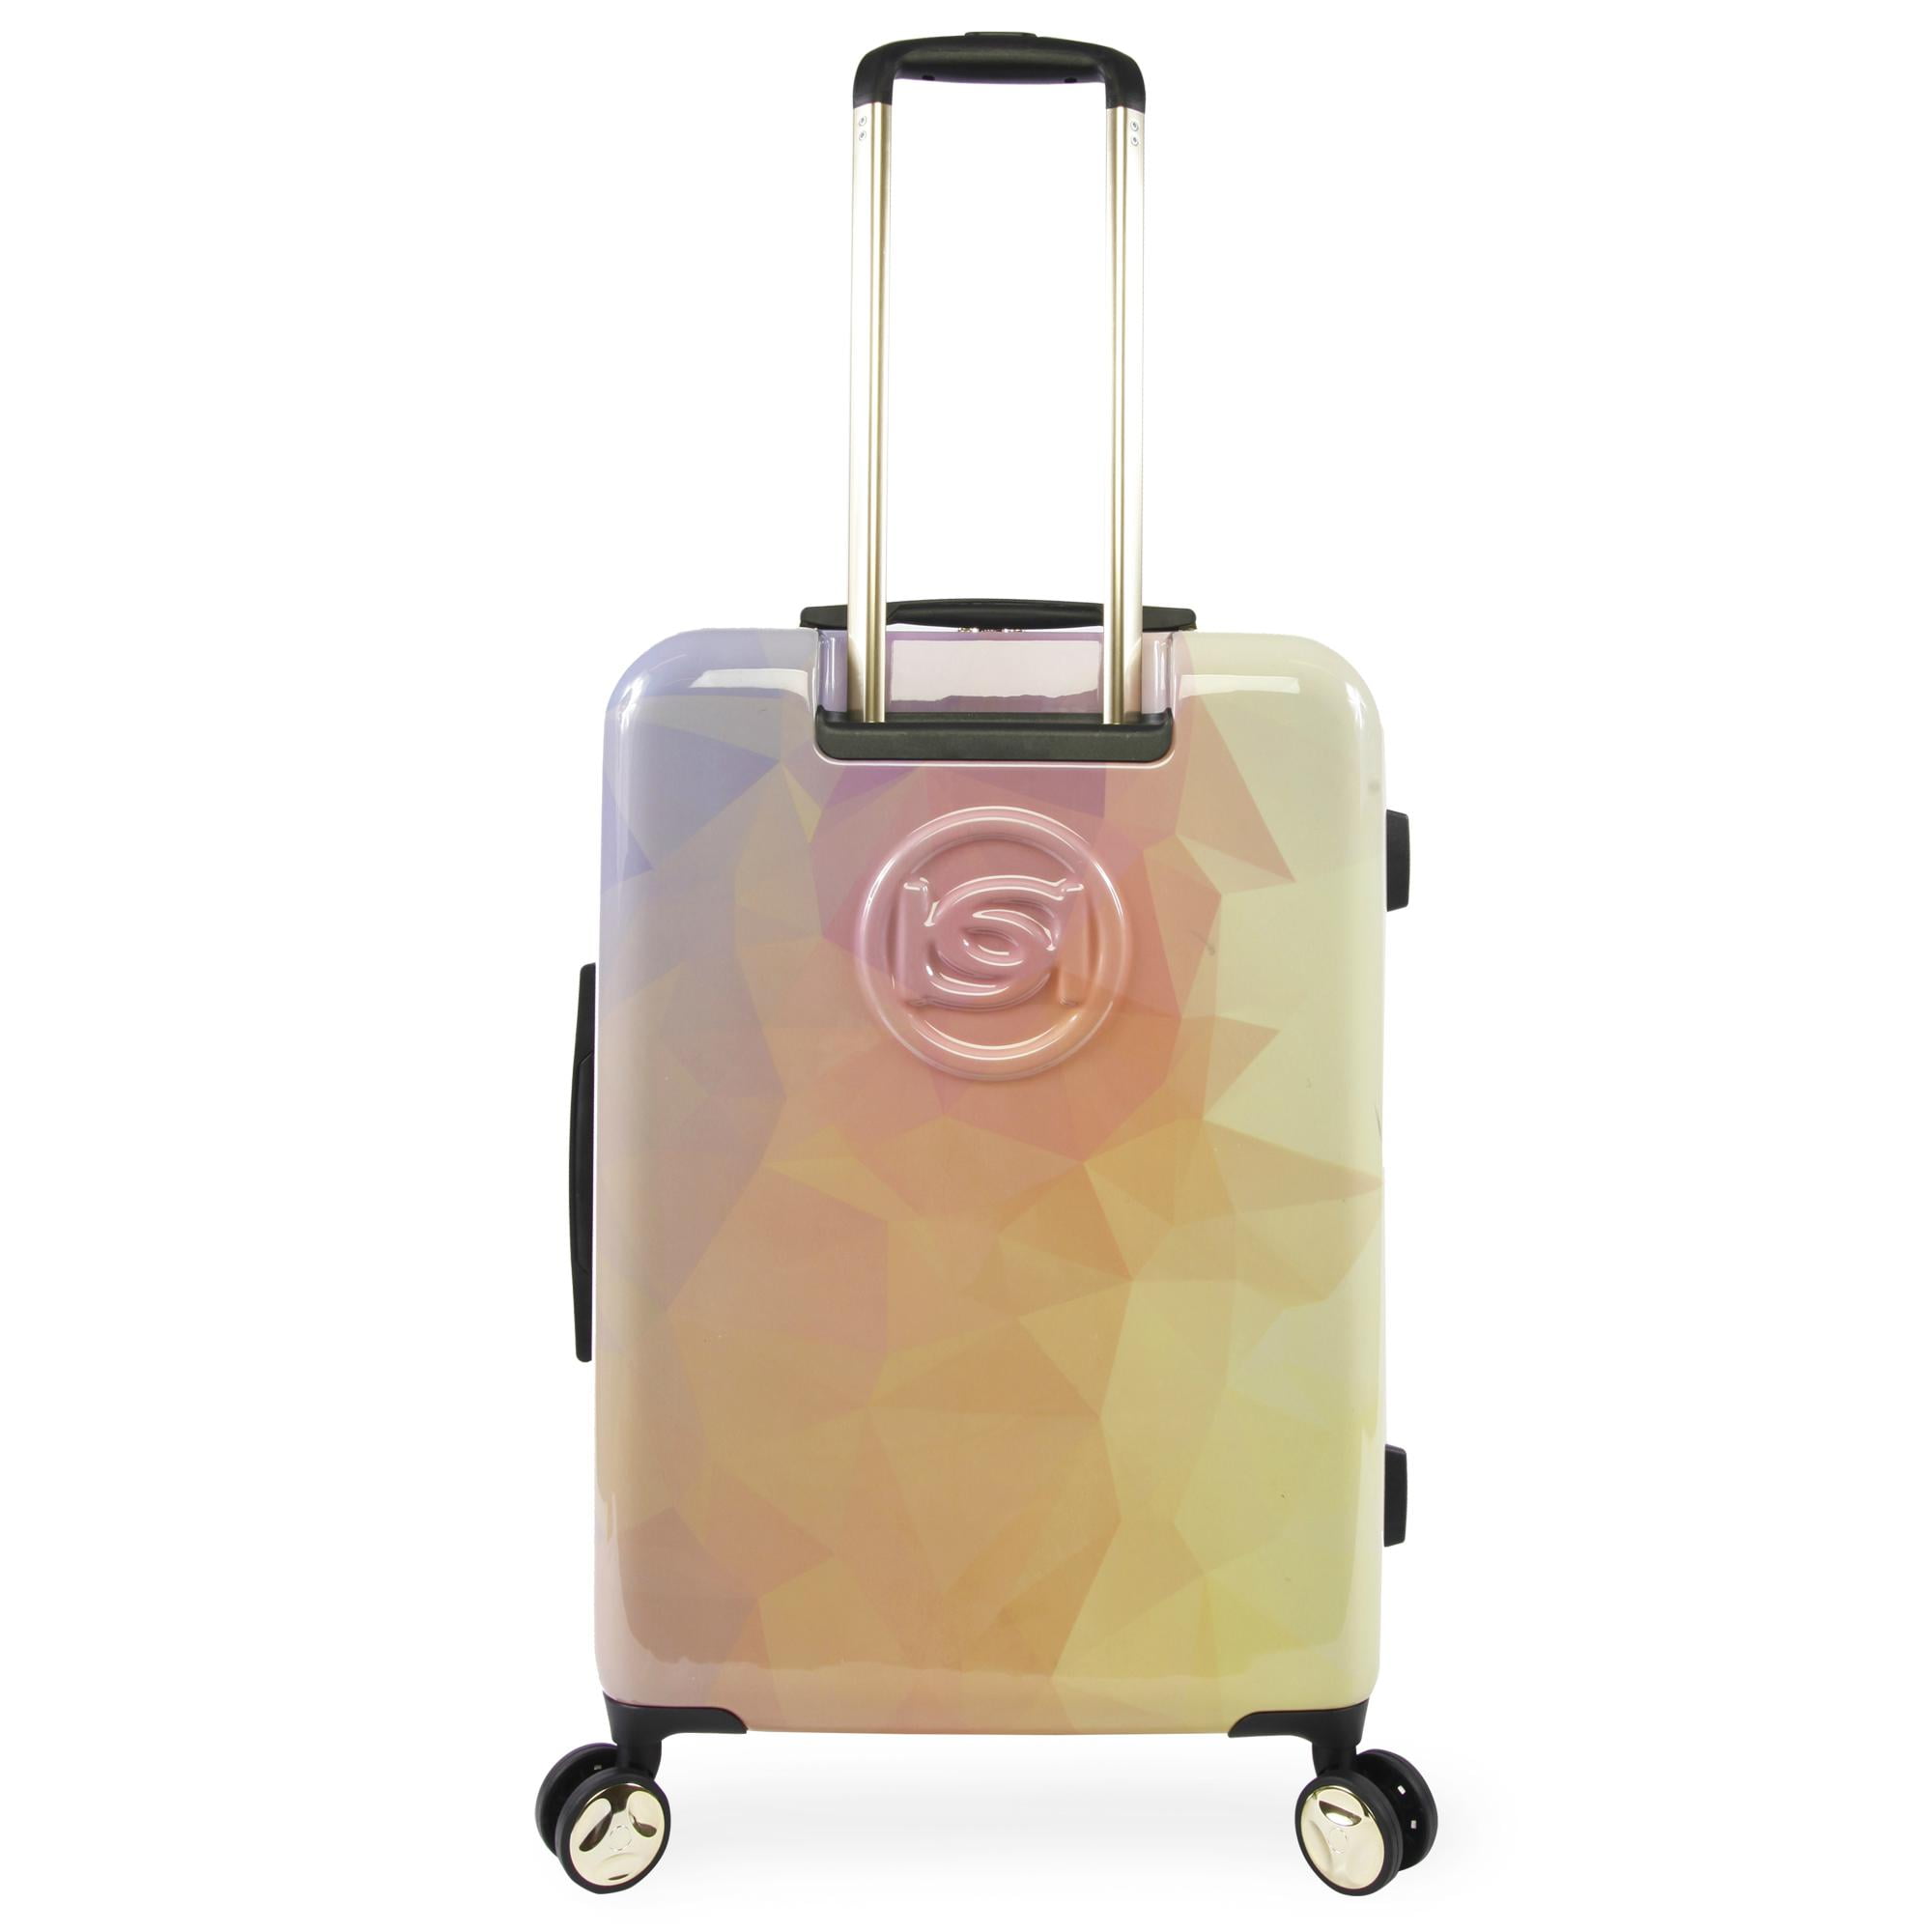 Bebe Emma 3-Piece Hardside Spinner Luggage Set in Grey - Walmart.com